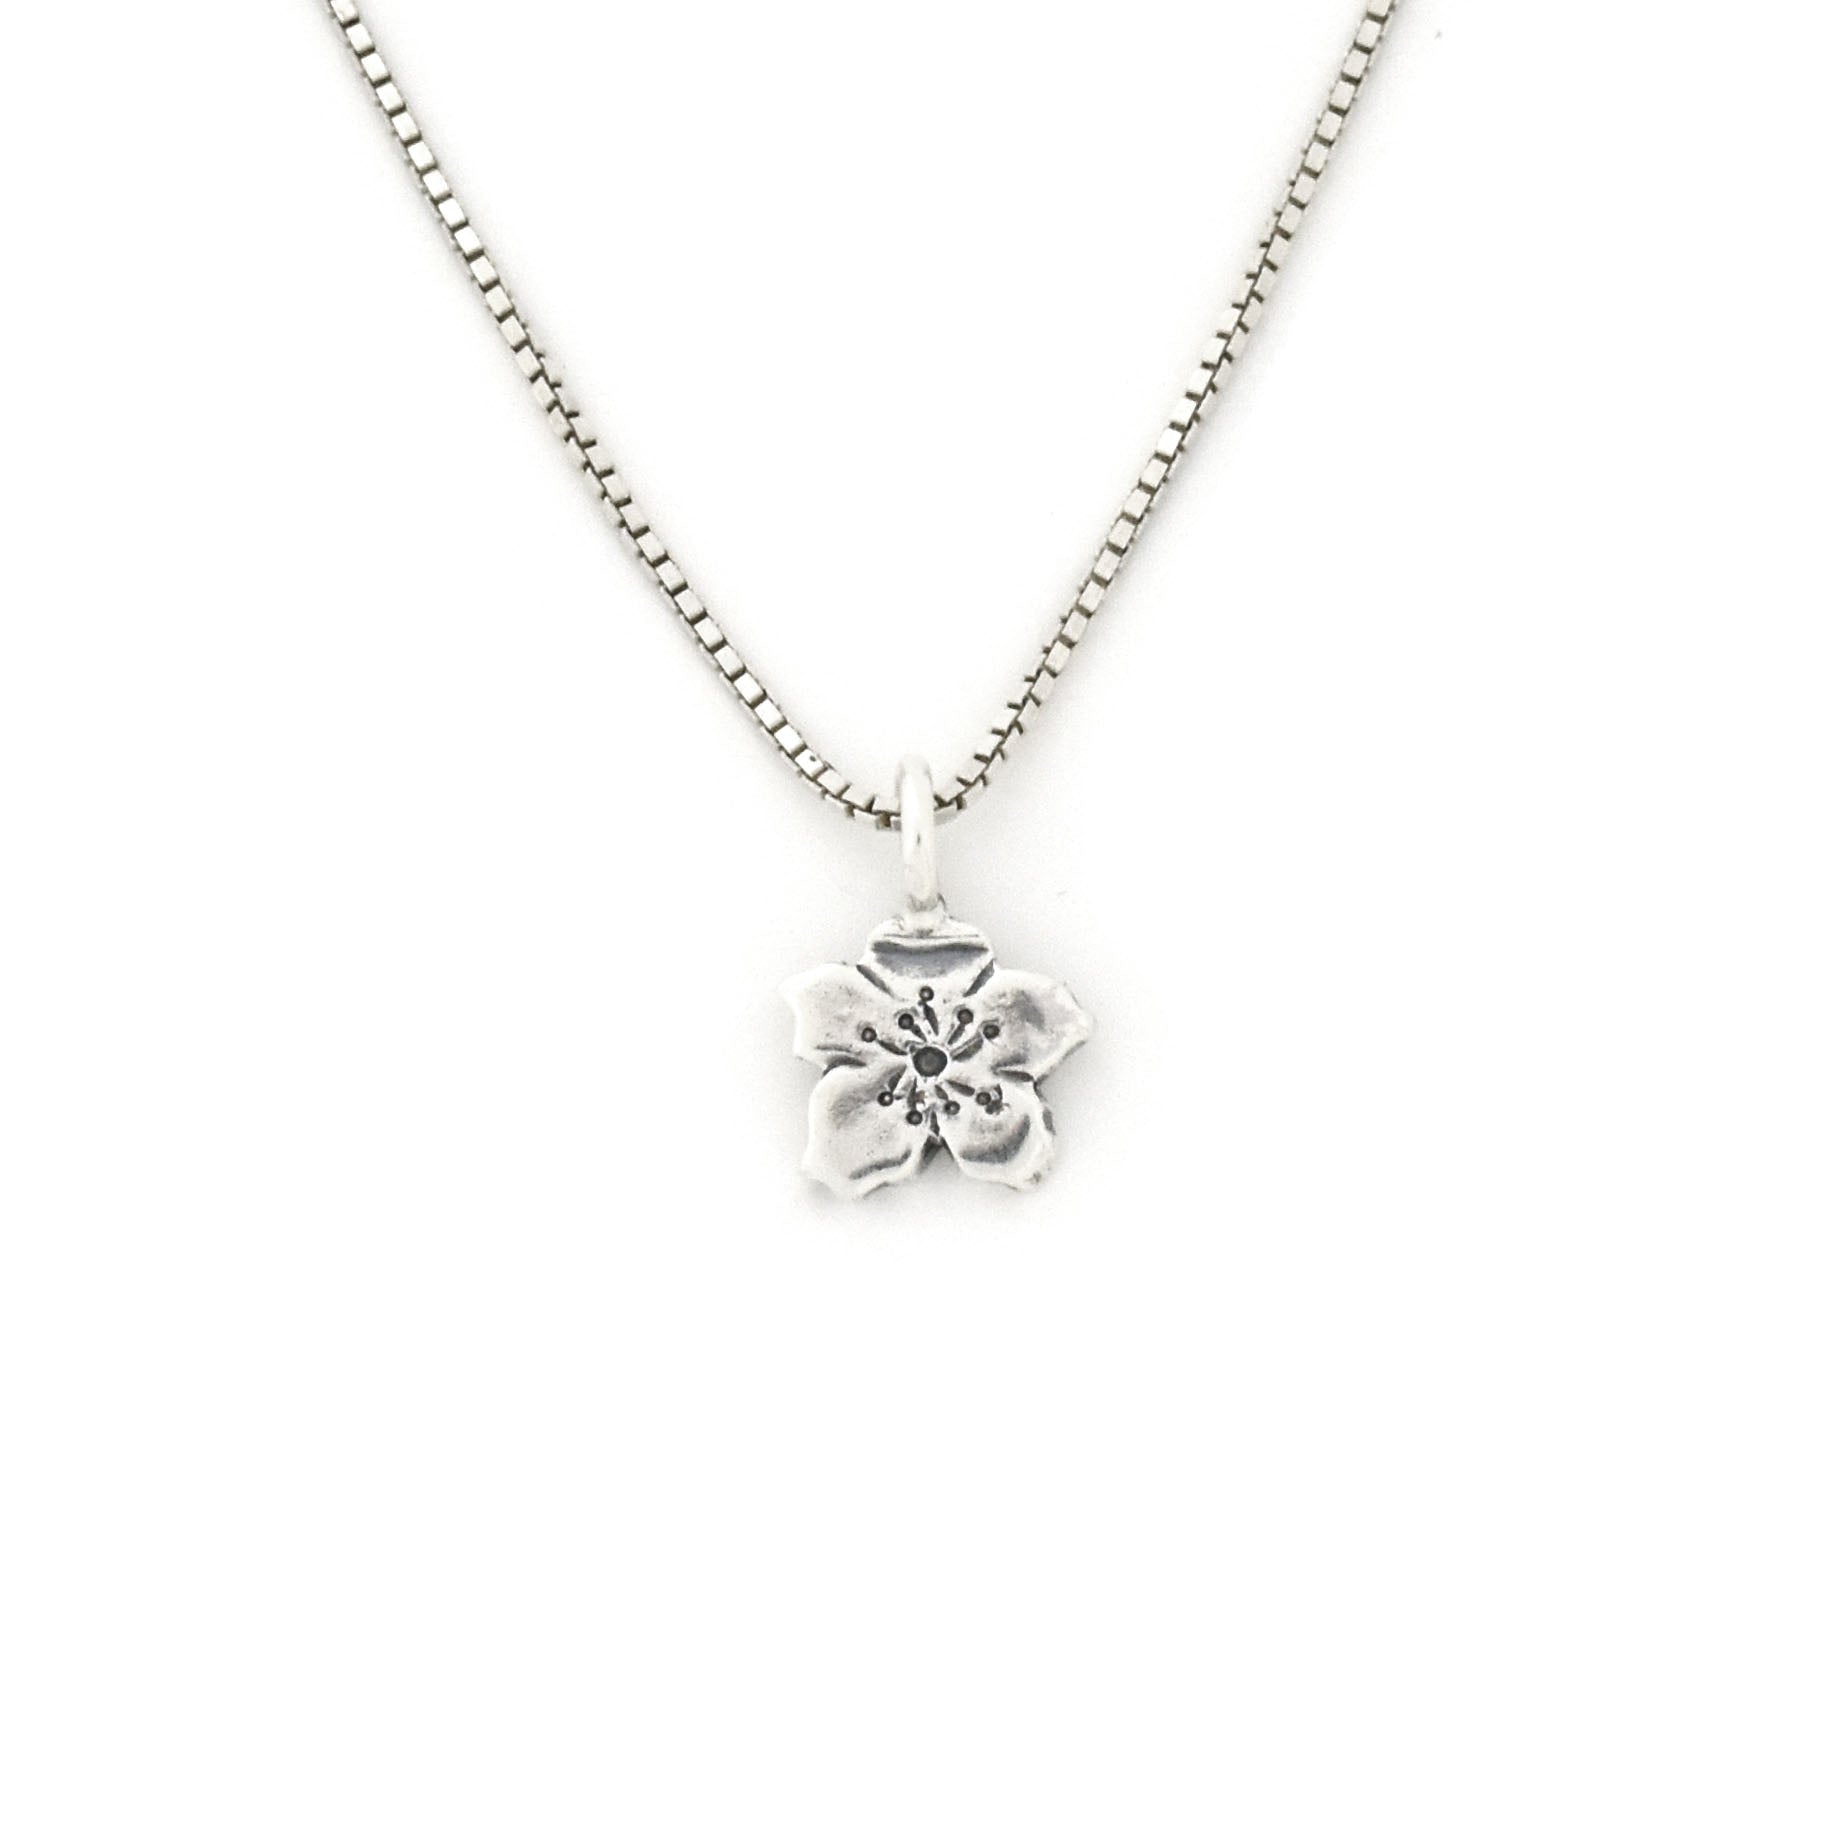 Apple Blossom Charm - Charm   5776 - handmade by Beth Millner Jewelry